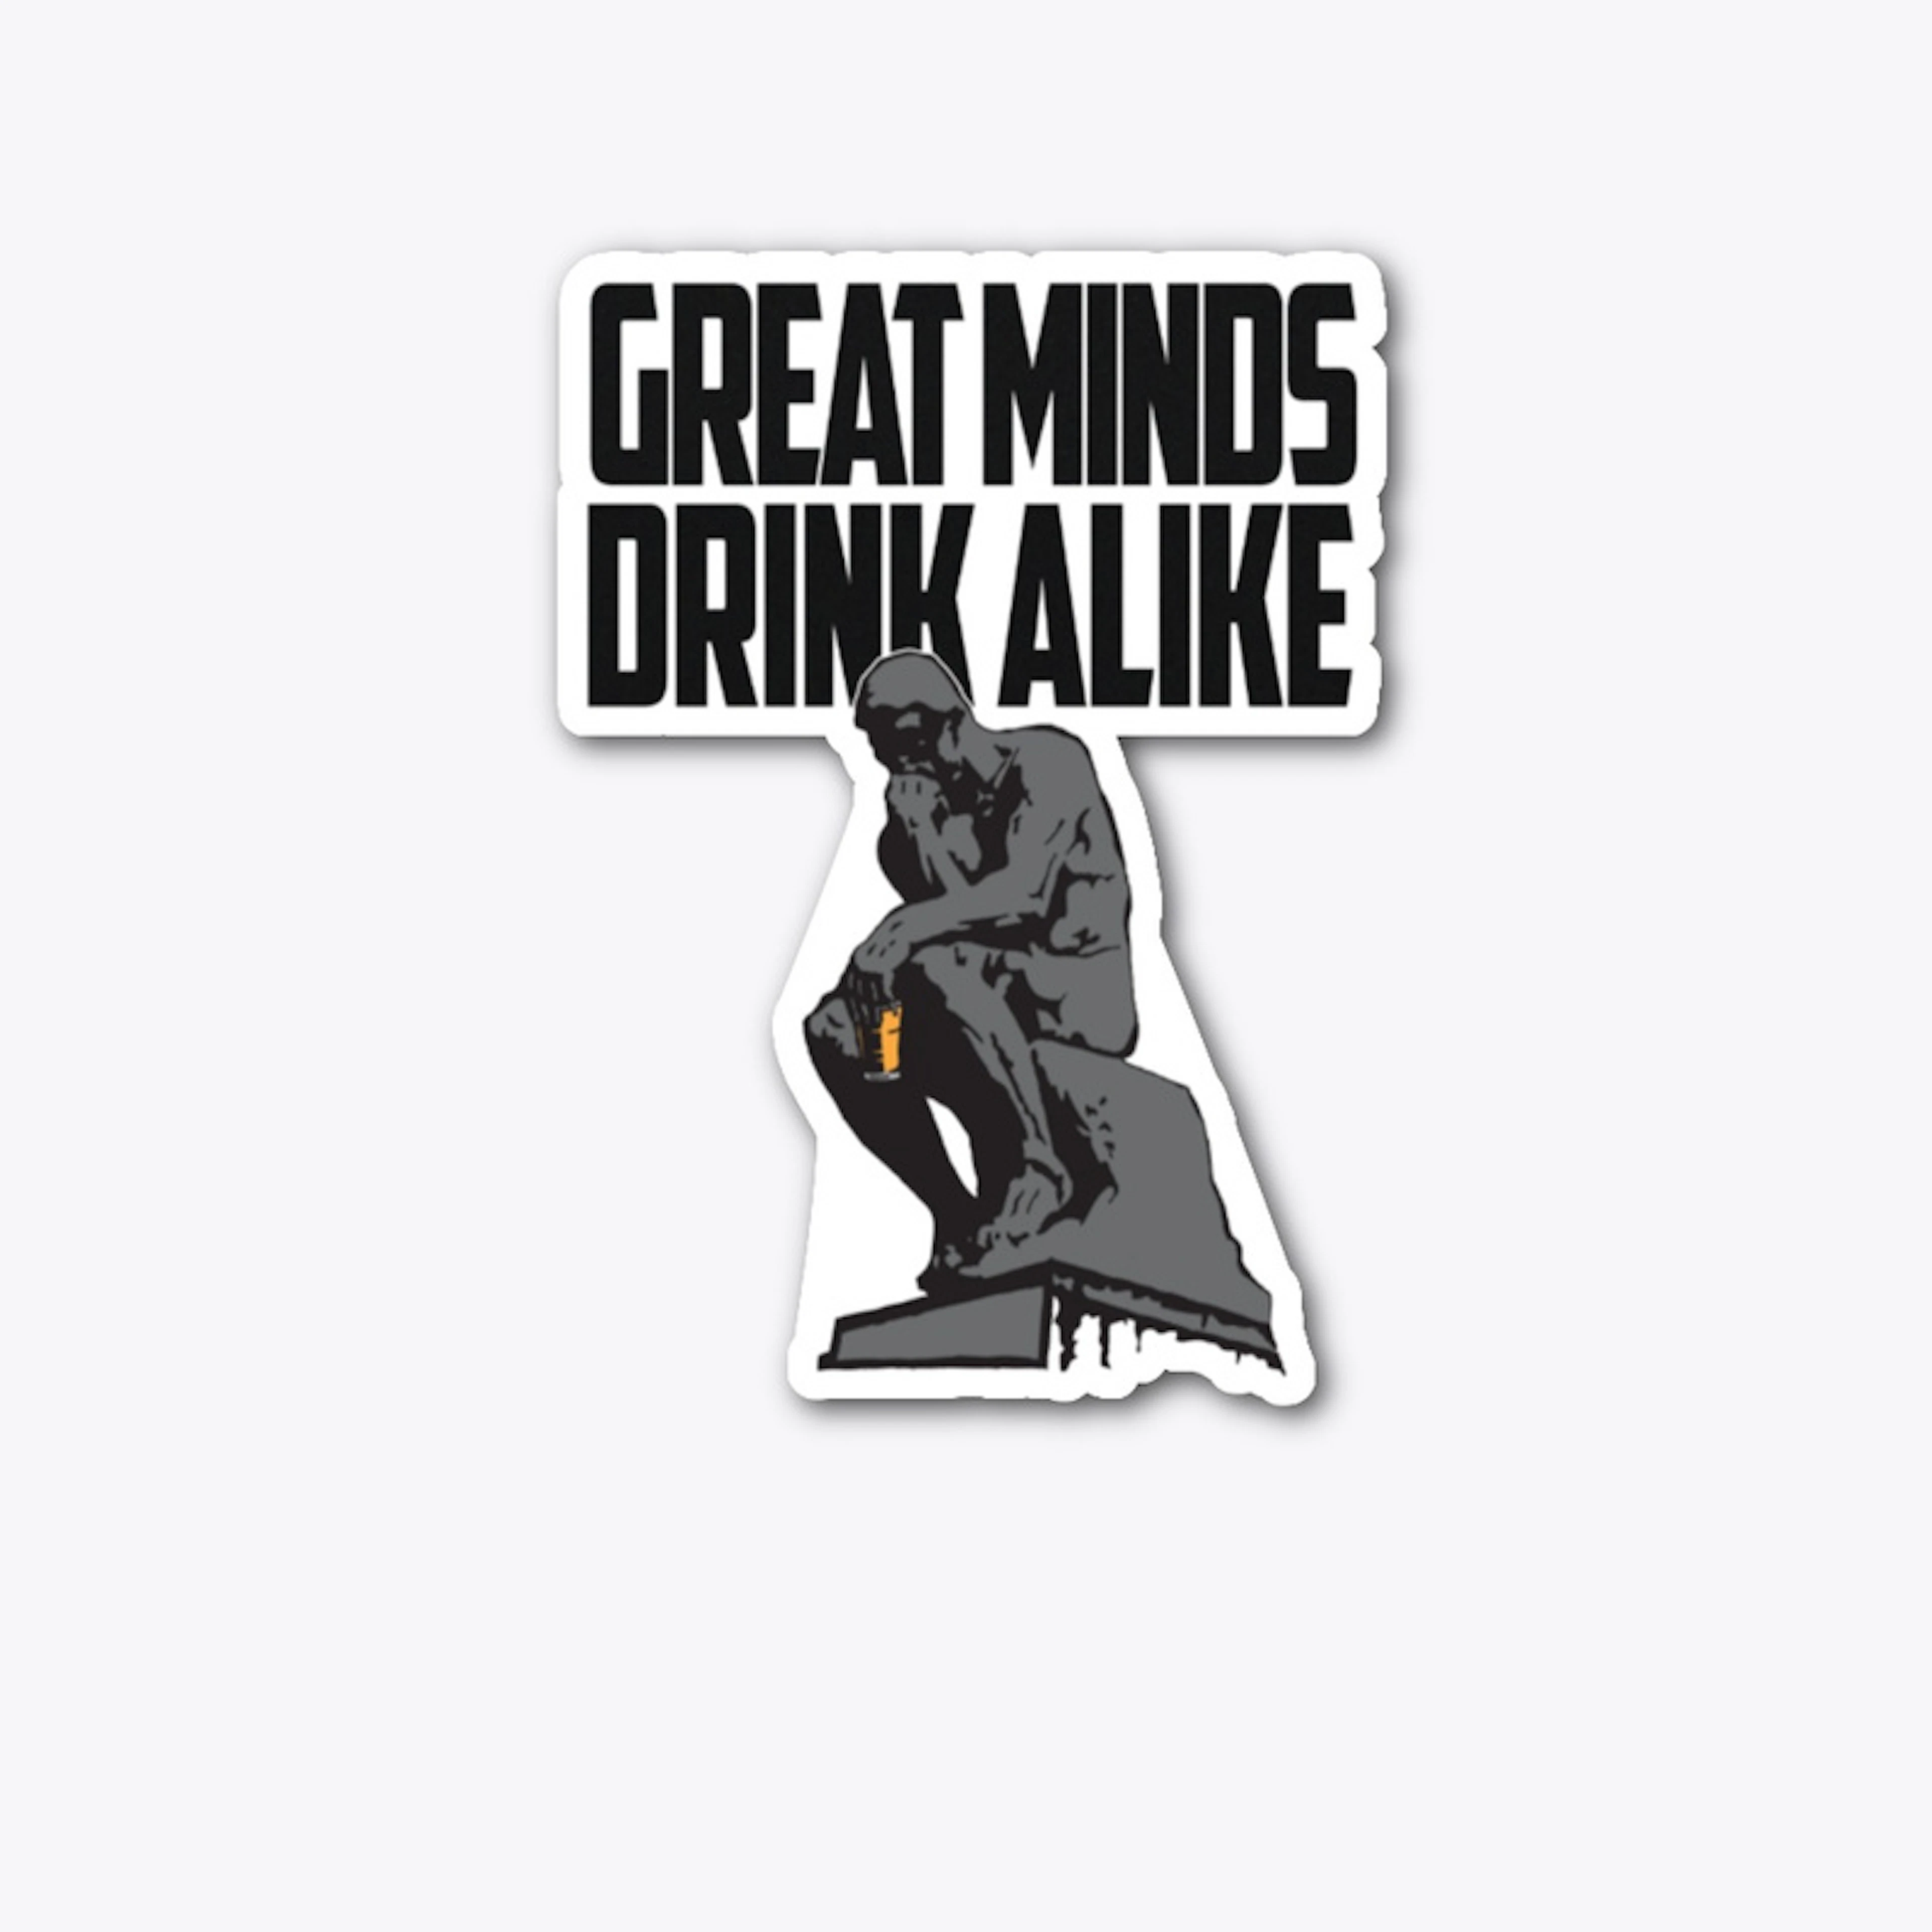 GREAT MINDS DRINK ALIKE.